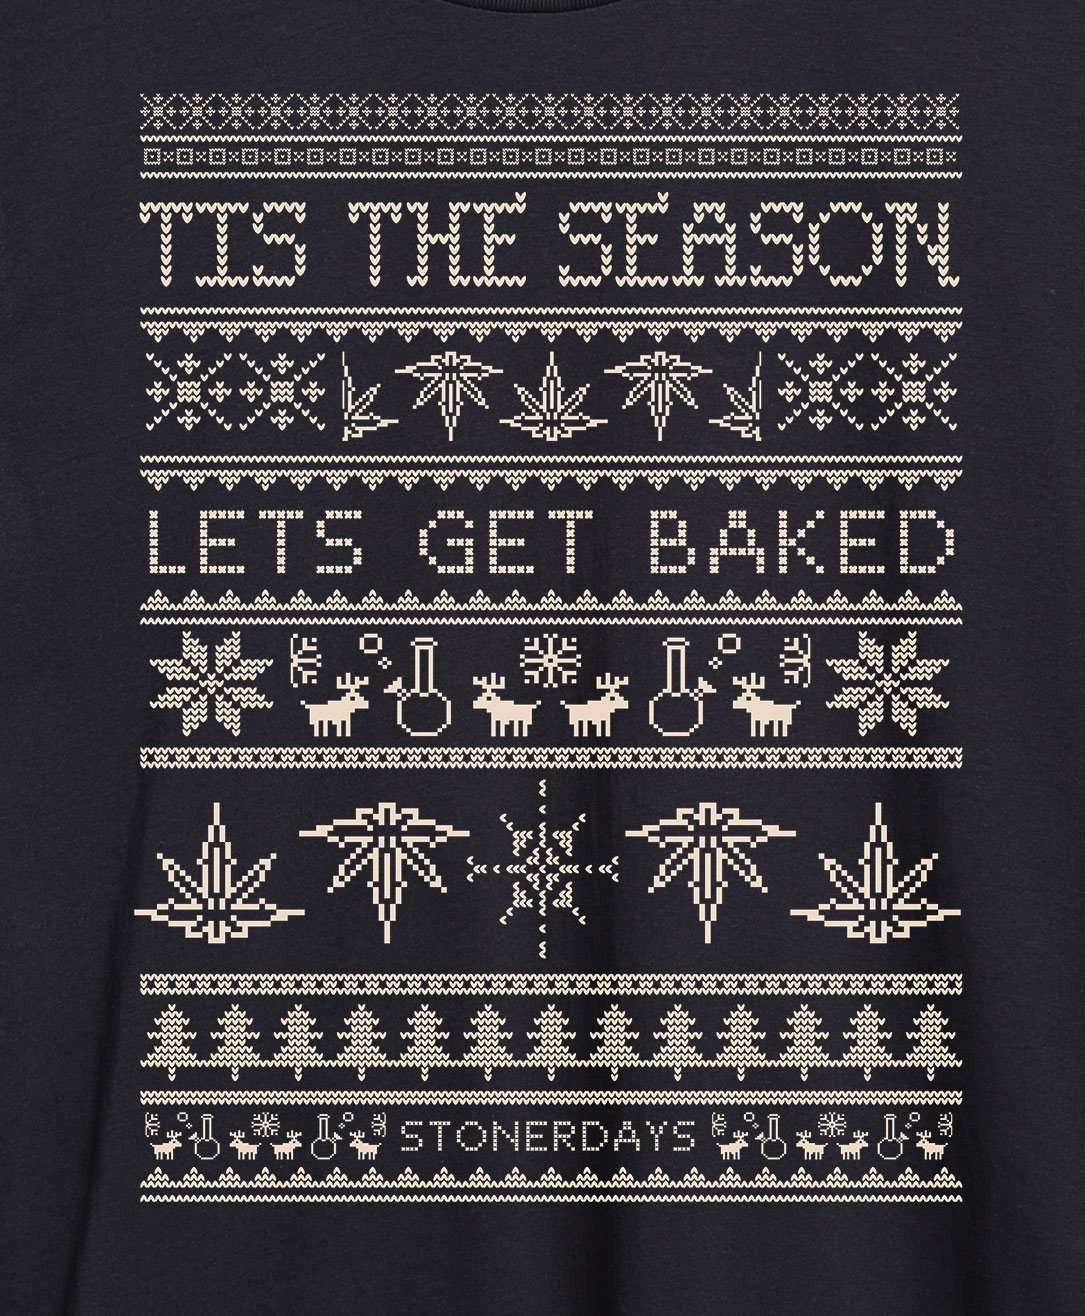 StonerDays Men's Brown Cotton T-Shirt with 'Tis The Season Let's Get Baked' Print